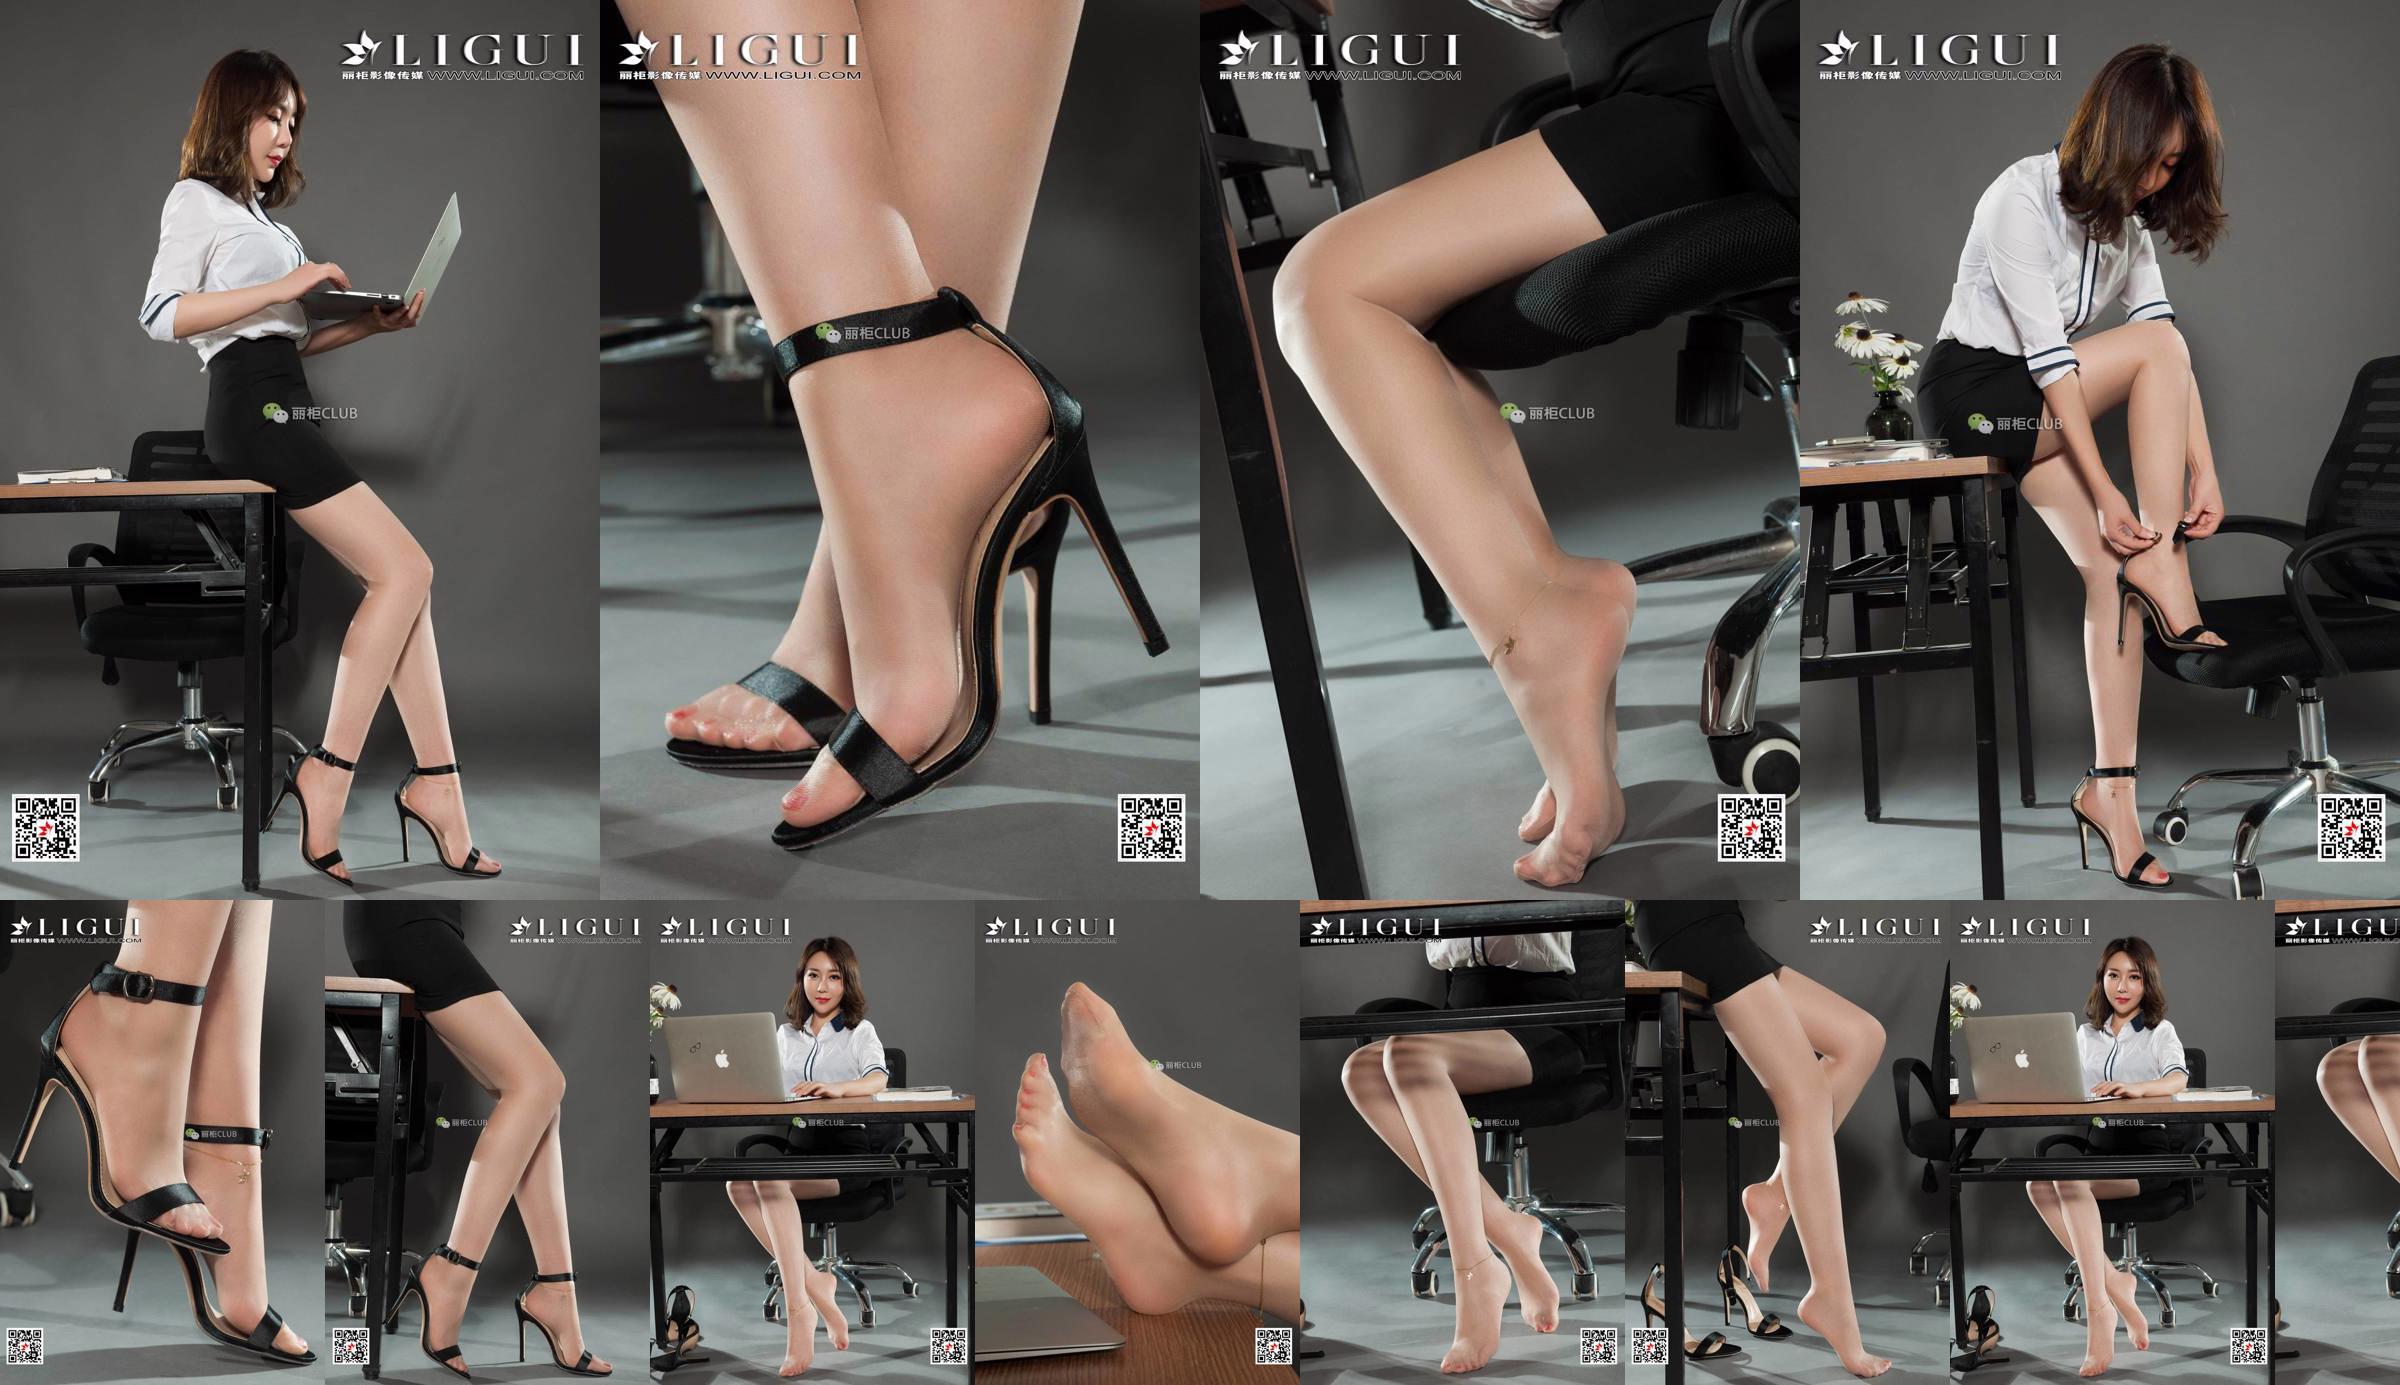 Leg model Li Mengying "High Heels and Beautiful Feet" [LIGUI] Internet Beauty No.6b3310 Page 1